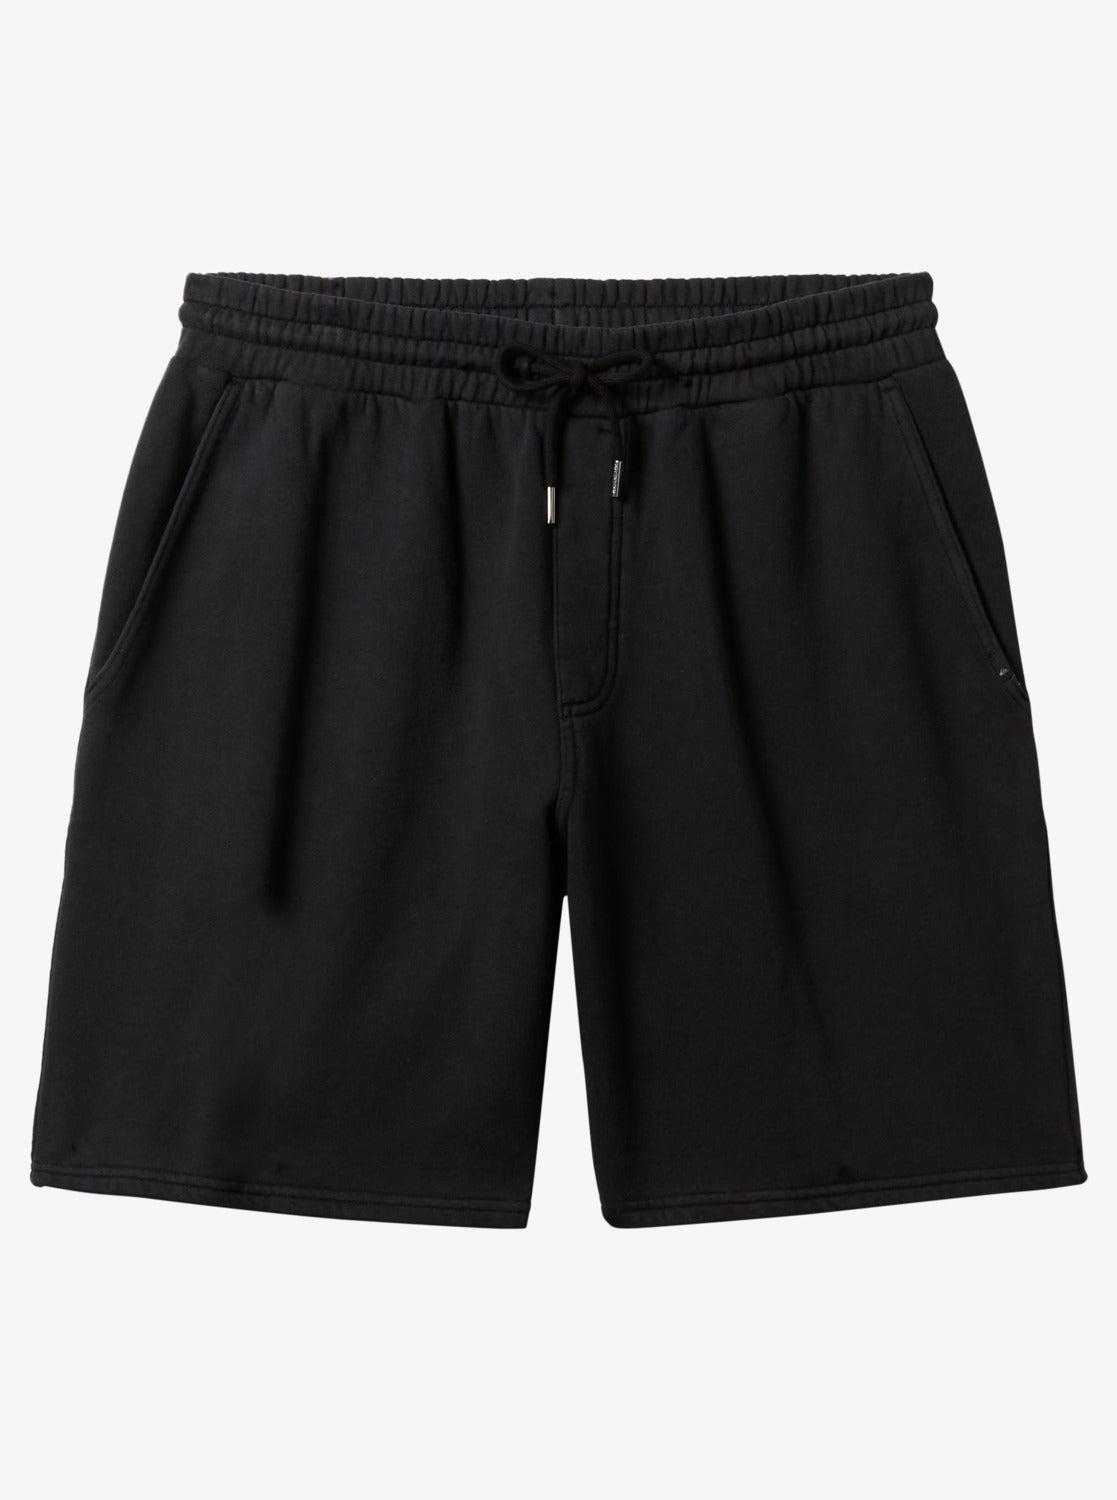 Quiksilver Salt Water Sweat Shorts in Black